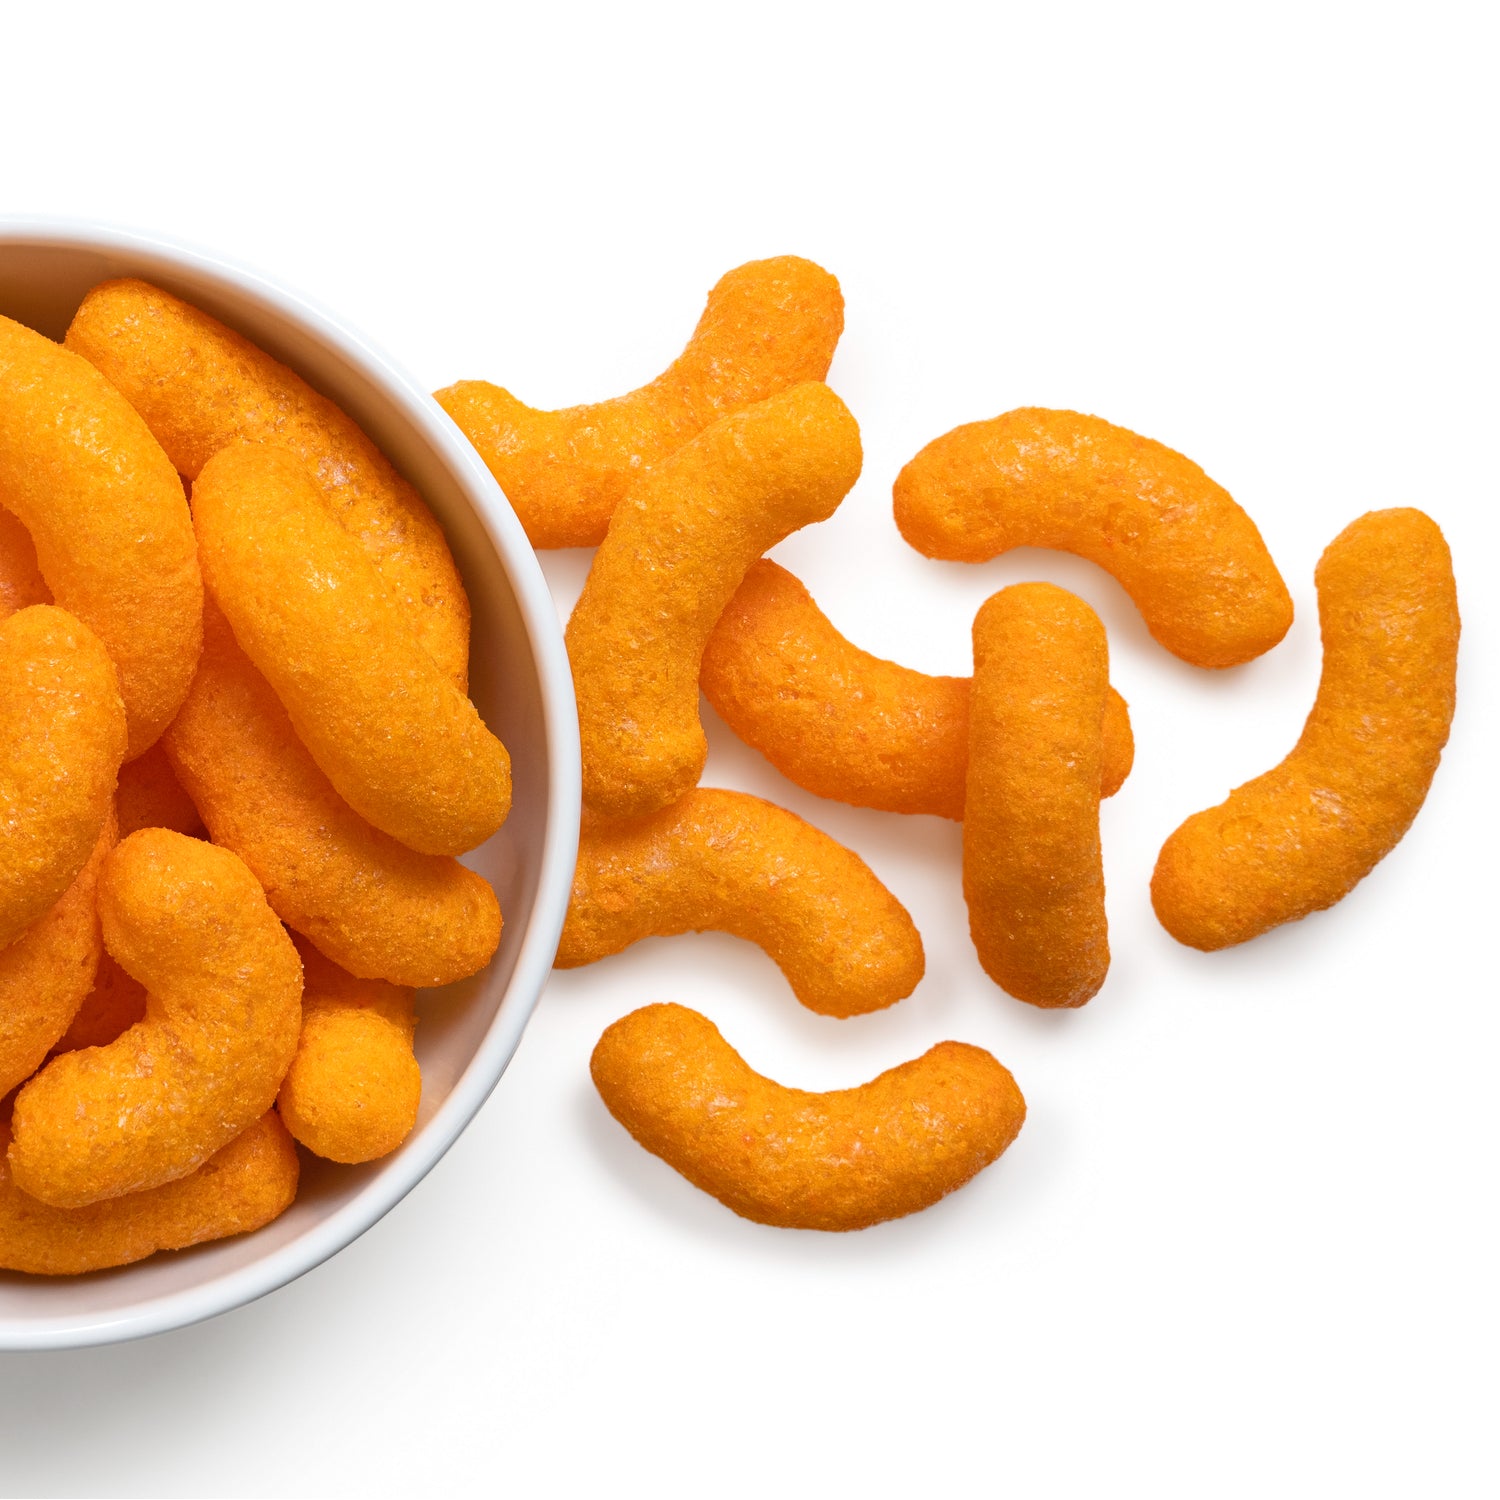 PUFFS  Cheetos